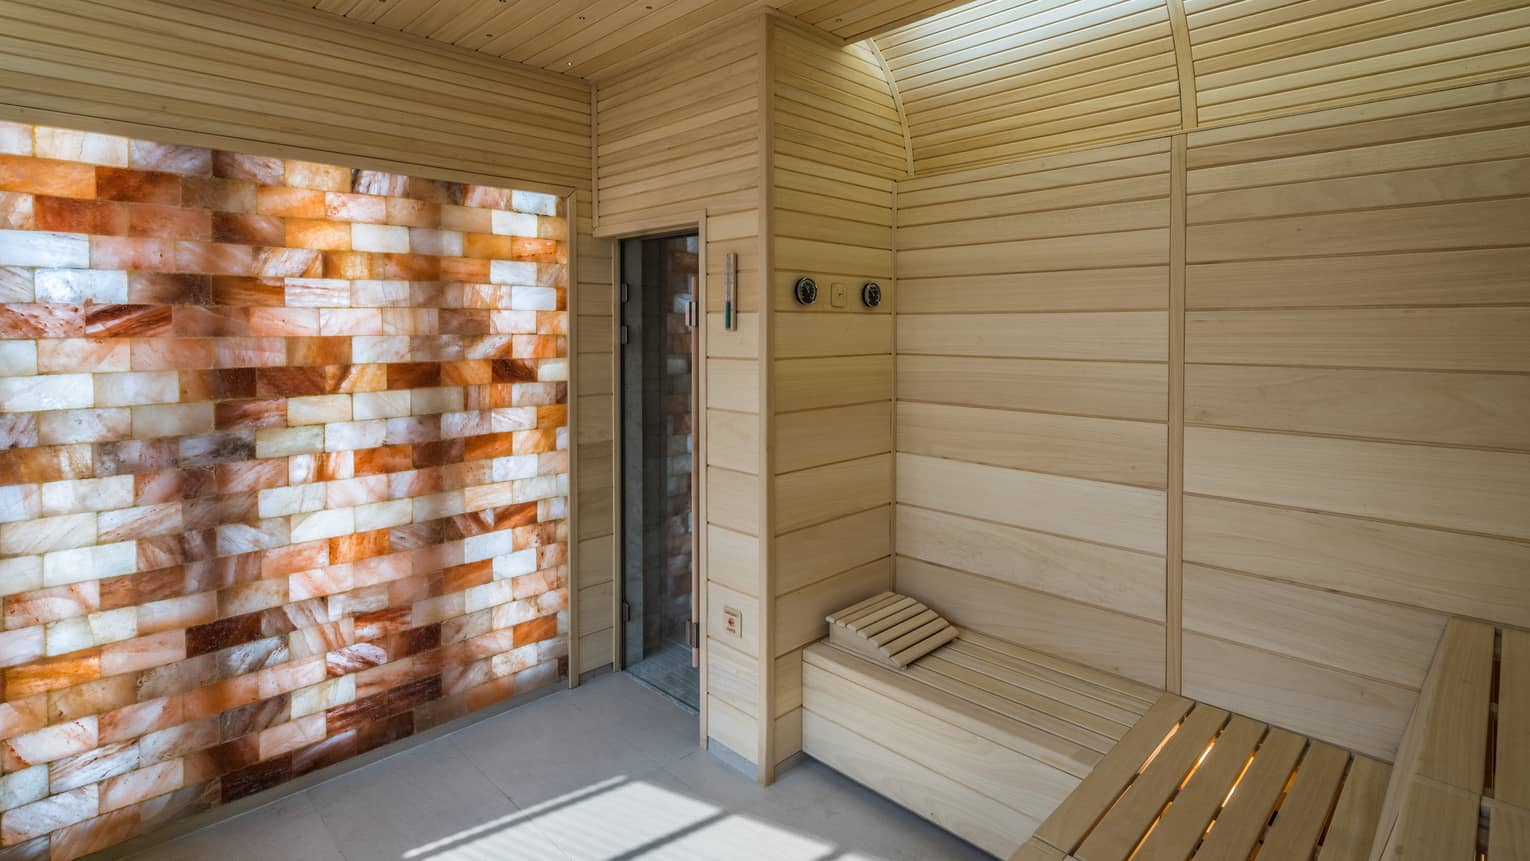 The Club wood sauna room with illuminated wall with wood, brick pattern